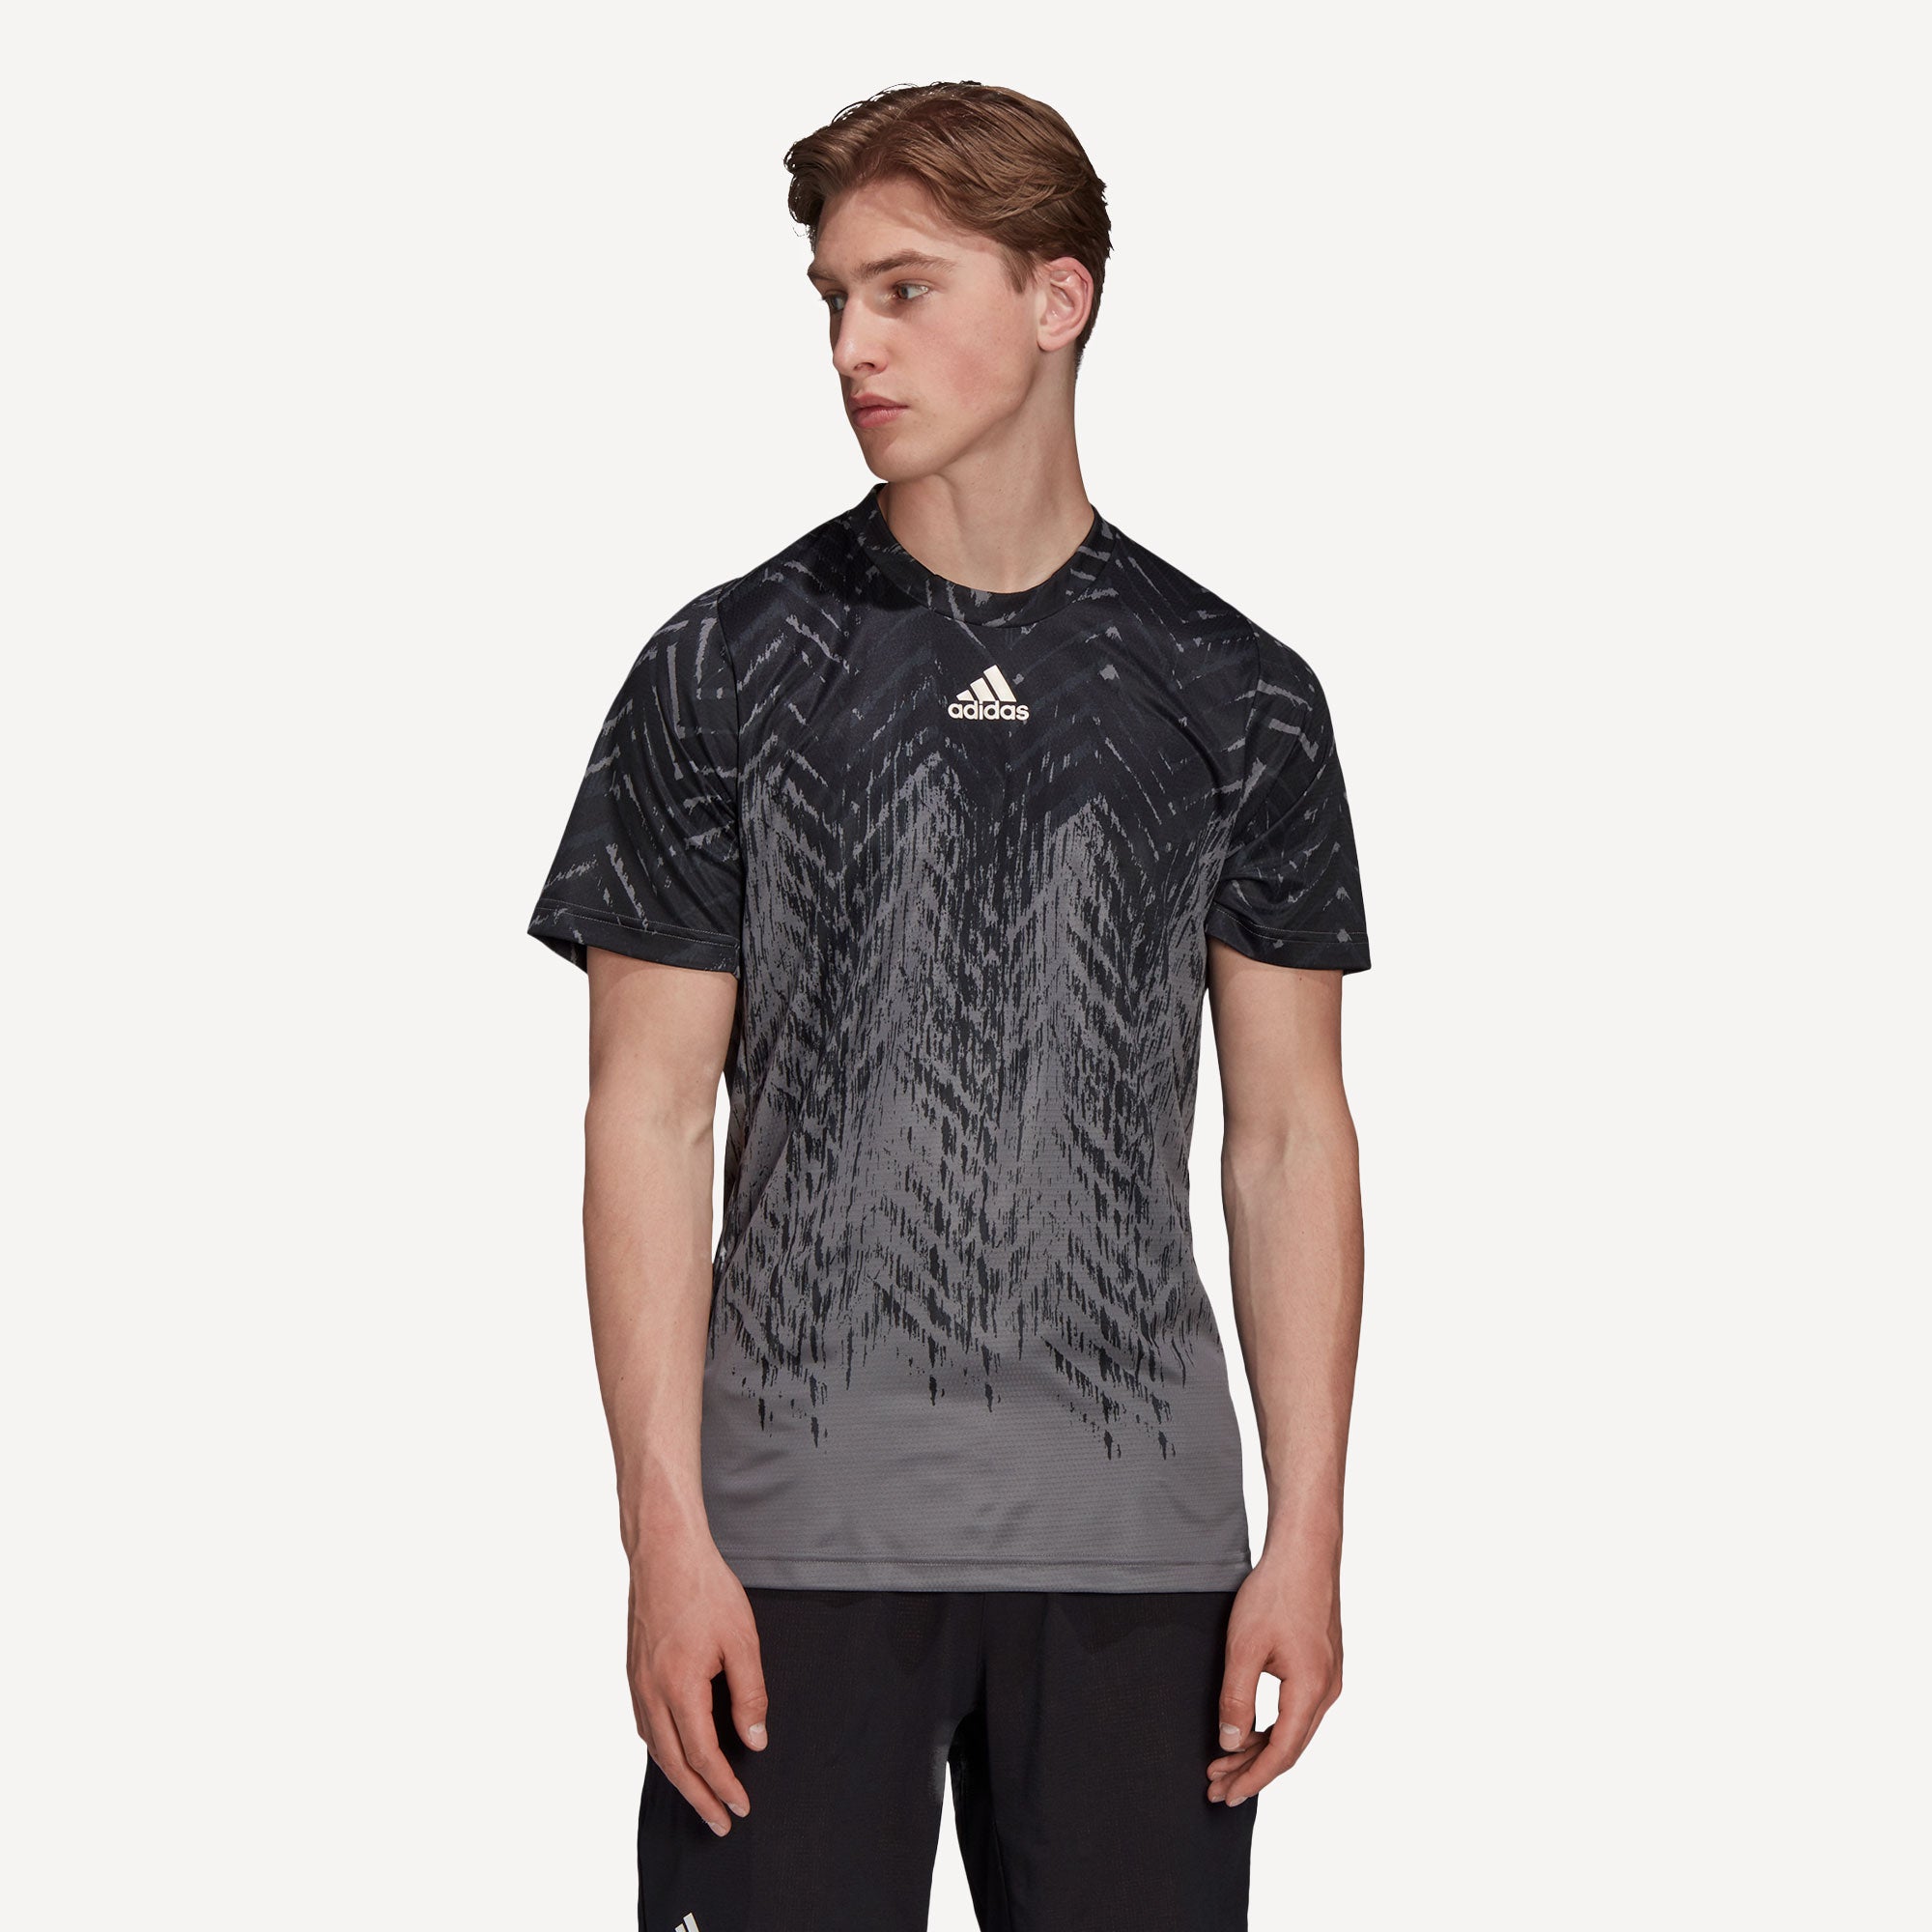 adidas Freelift Primeblue Men's Printed Tennis Shirt Grey (1)